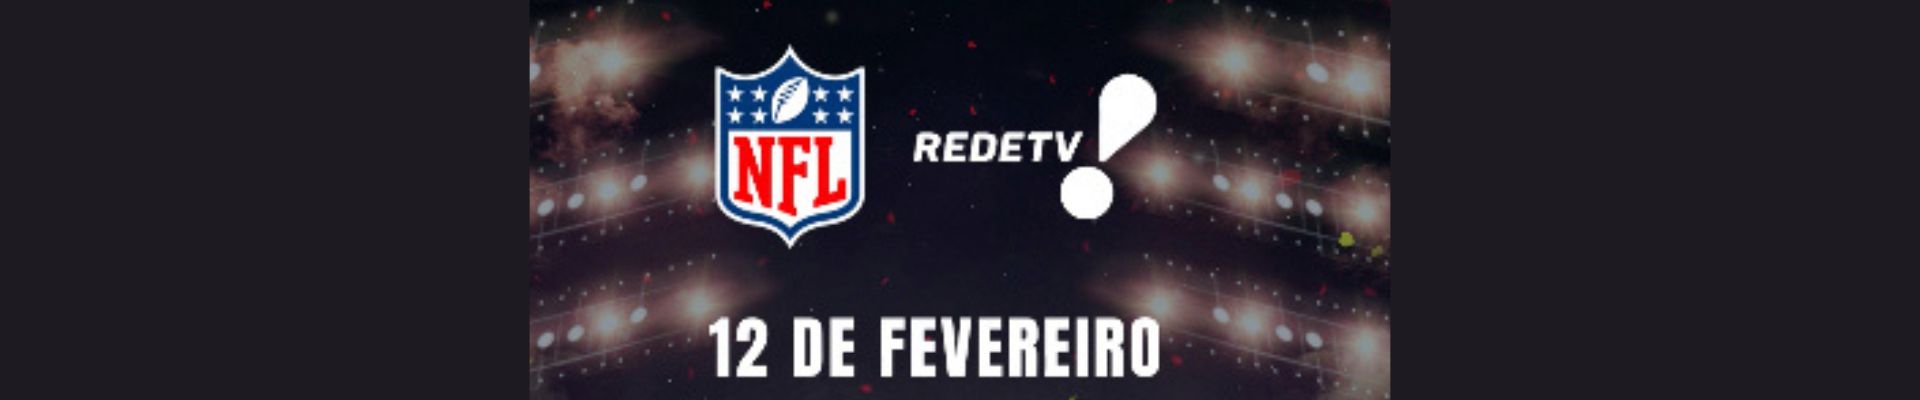 Super Bowl terá transmissão ao vivo para todo o Brasil